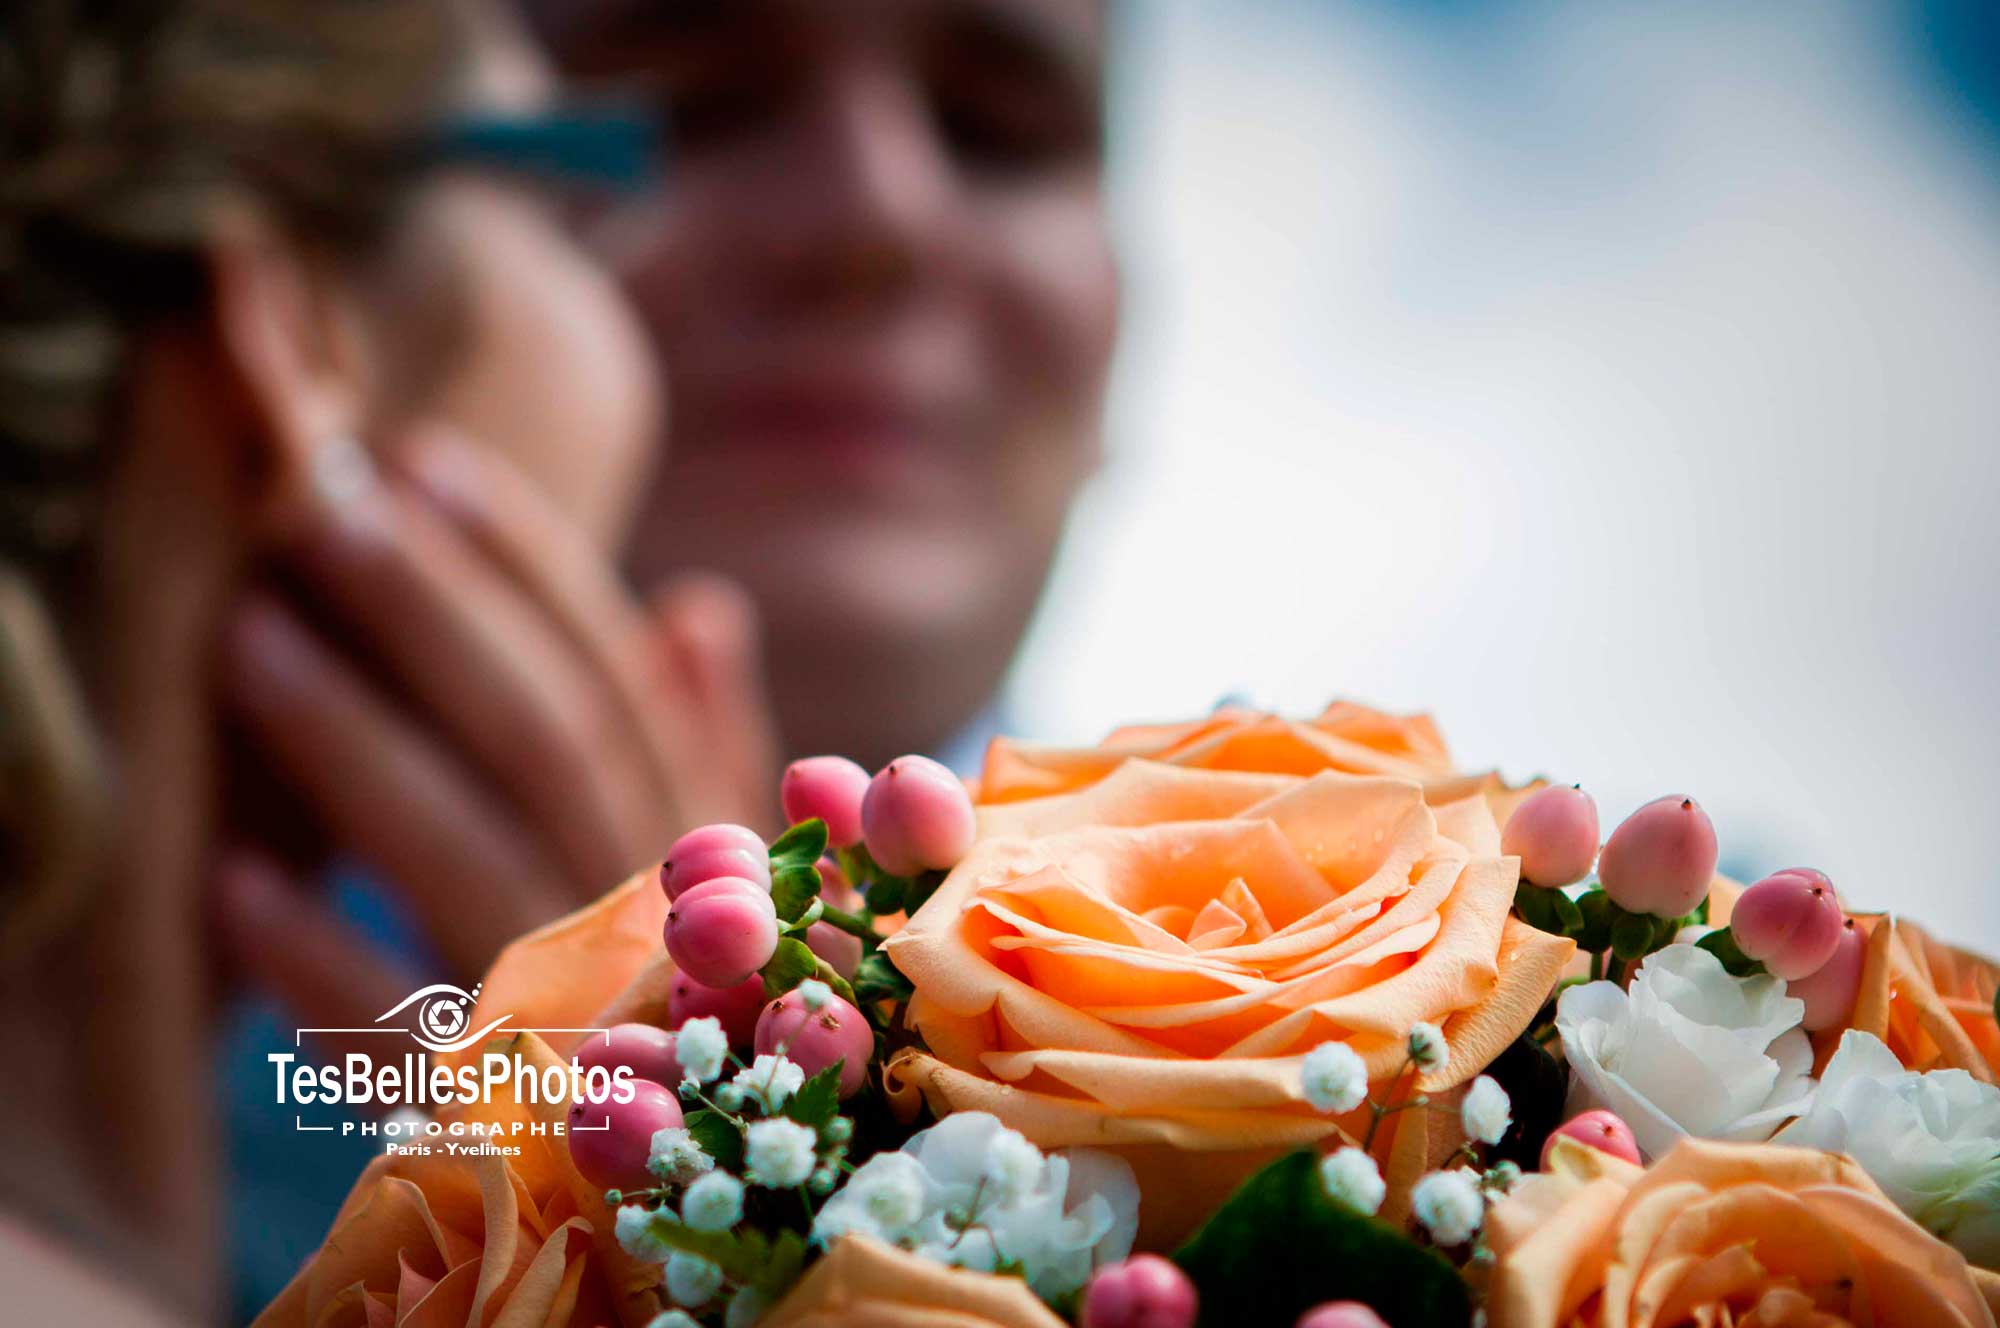 Photographe mariage Seine-Saint-Denis tarifs, photographe pas cher pour photo mariage